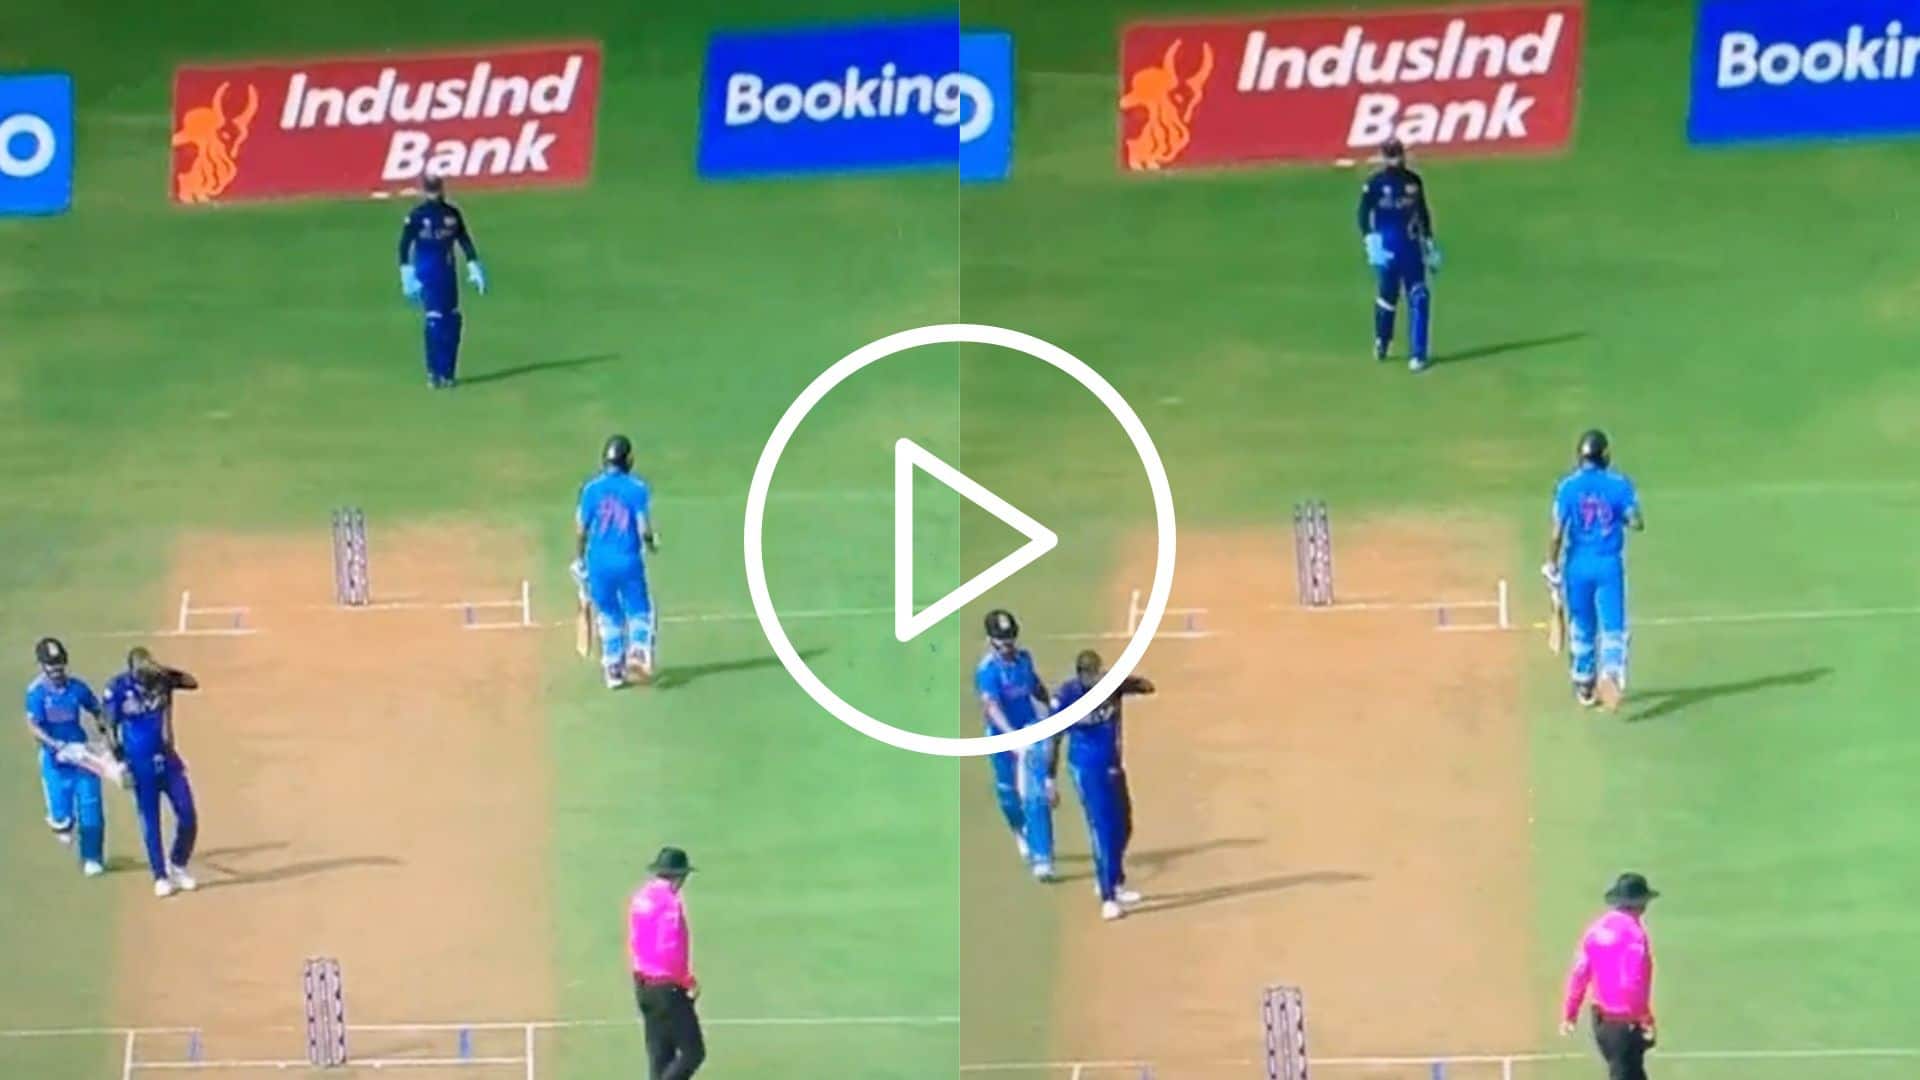 [Watch] Virat Kohli 'Slaps' Mathews On The 'Backside' With His Bat